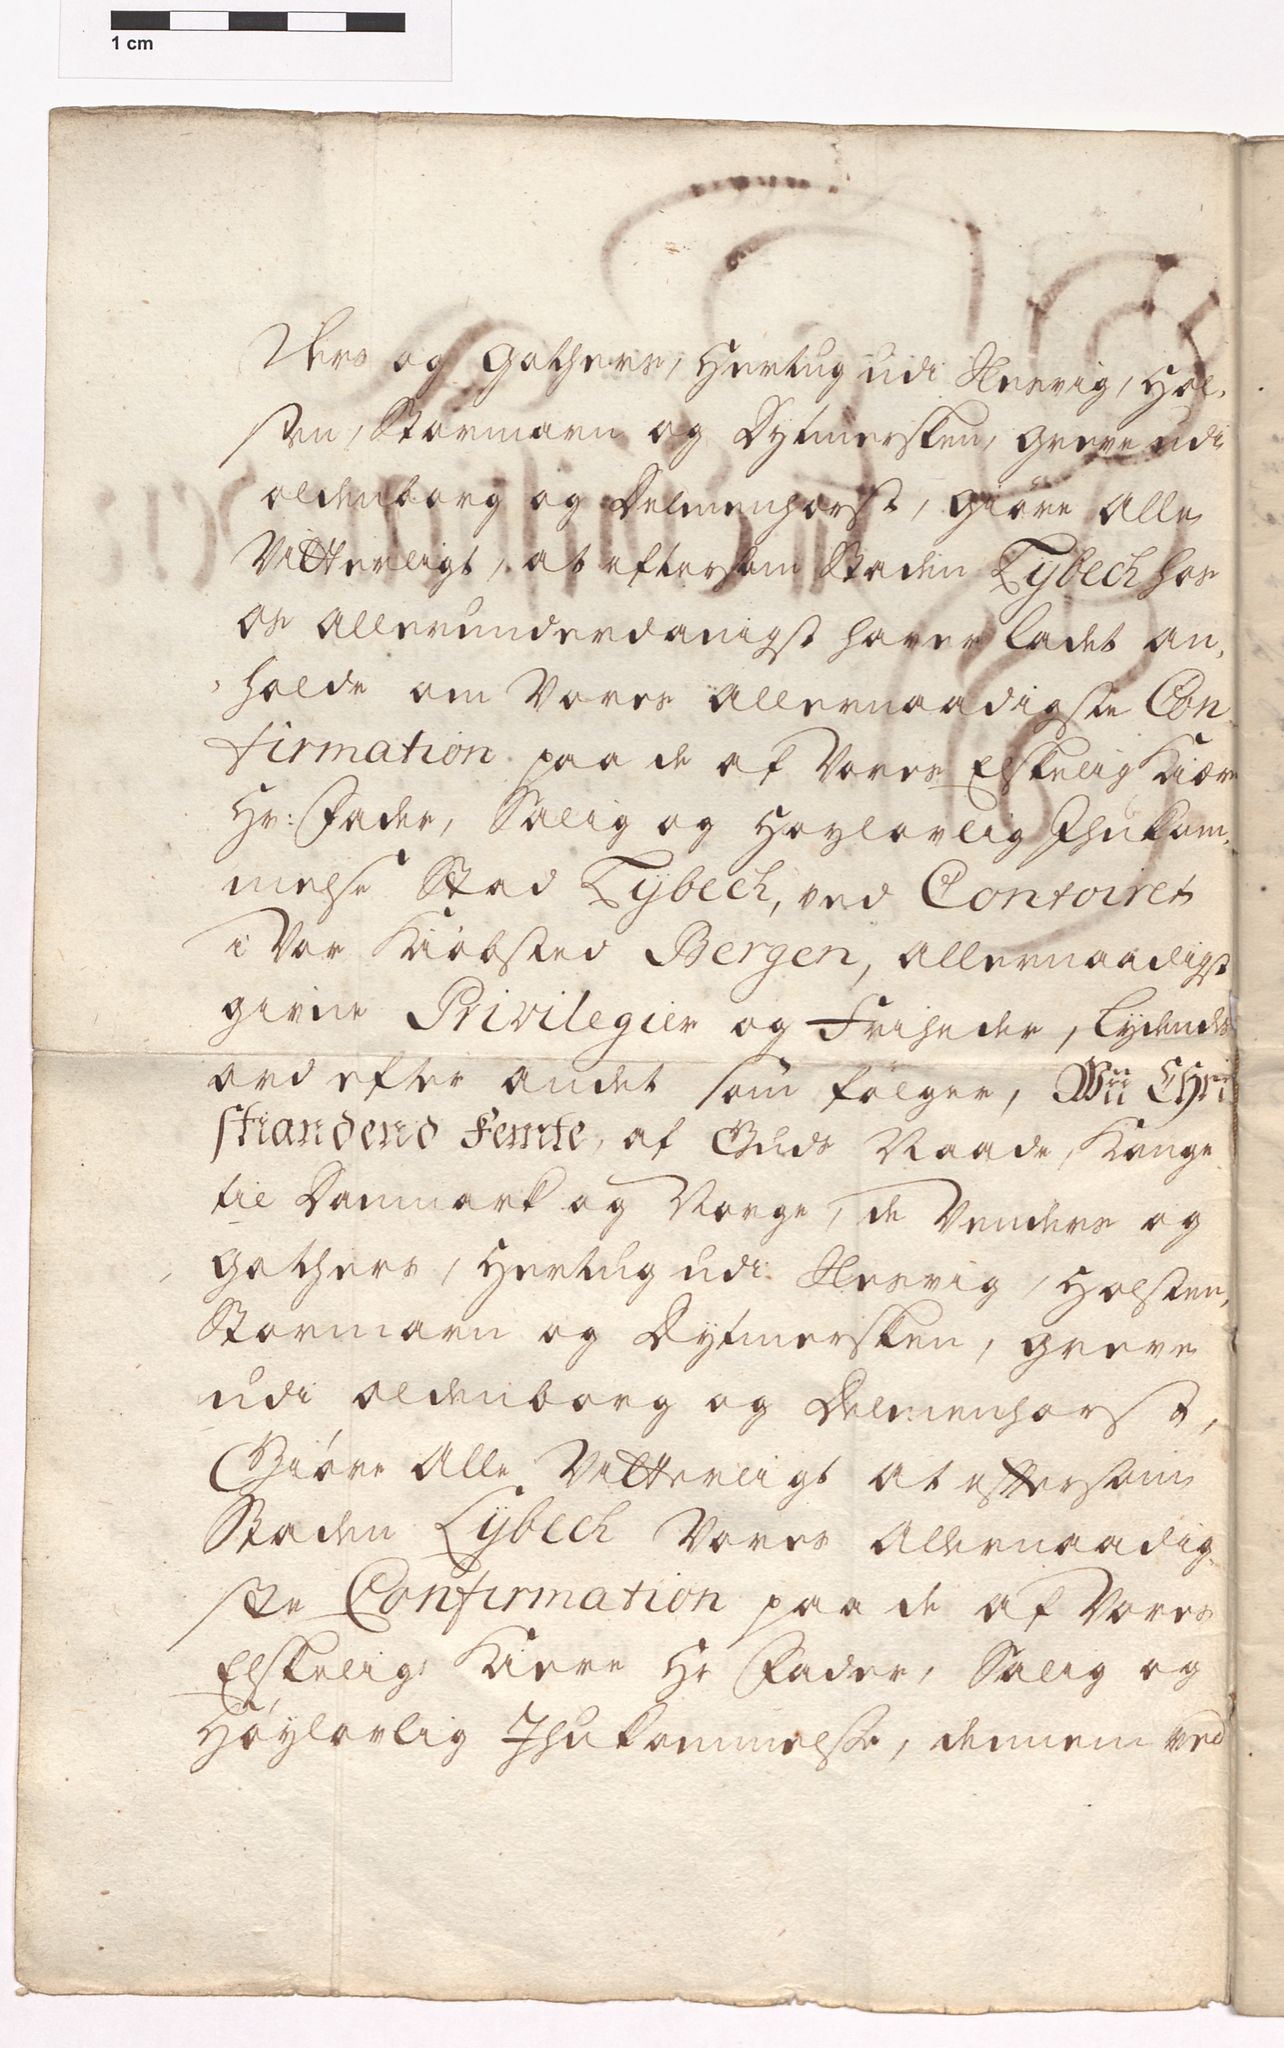 07.1 Urkunden, 3 Auswärtige Beziehungen (Externa), AHL/-/21: Norwegen (Norvagica); Kontor zu Bergen, 1247-1747, s. 1174